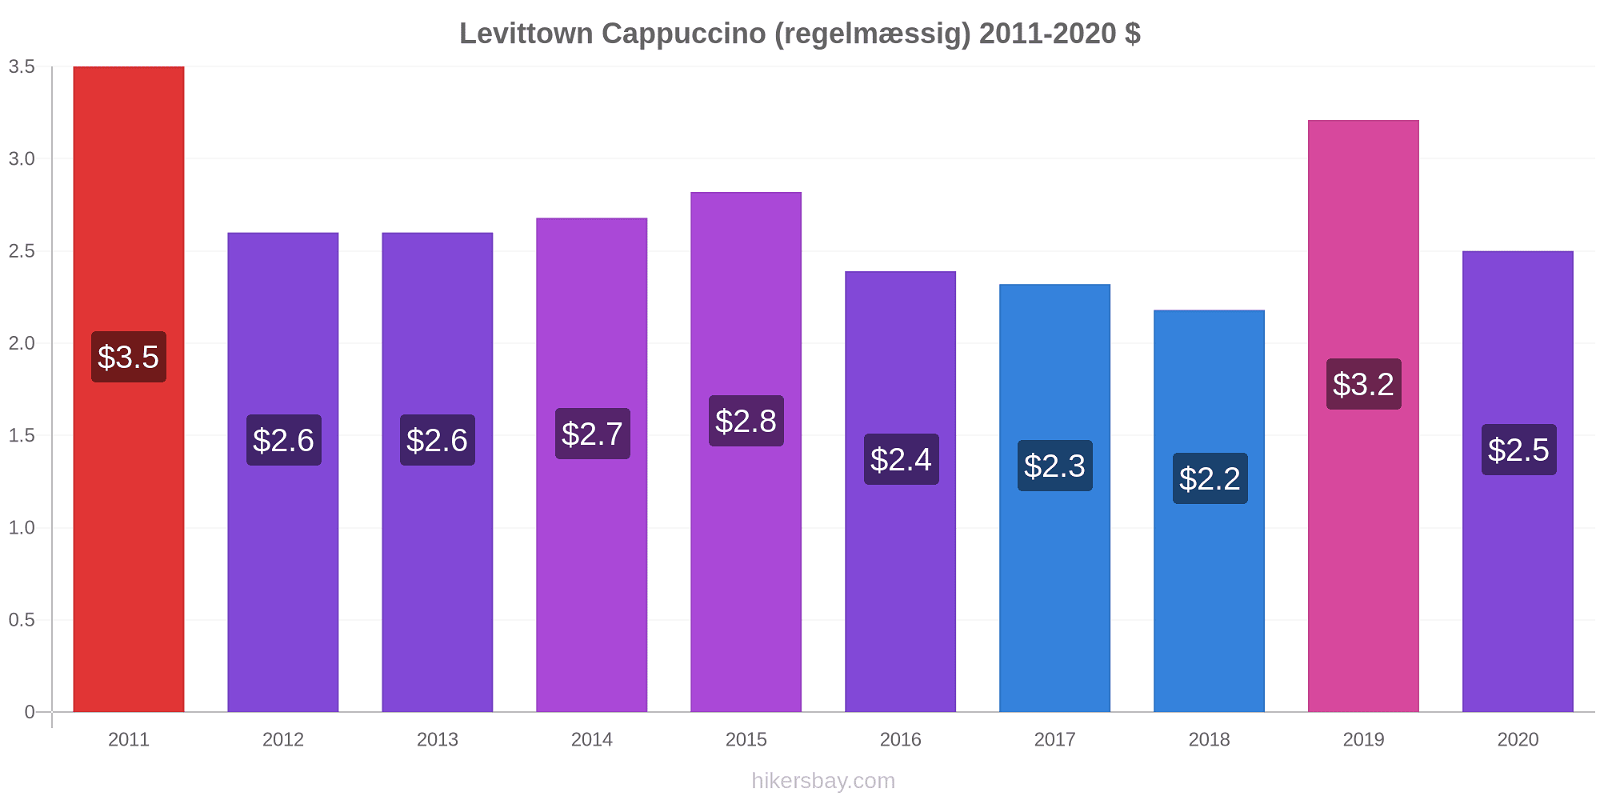 Levittown prisændringer Cappuccino (regelmæssig) hikersbay.com